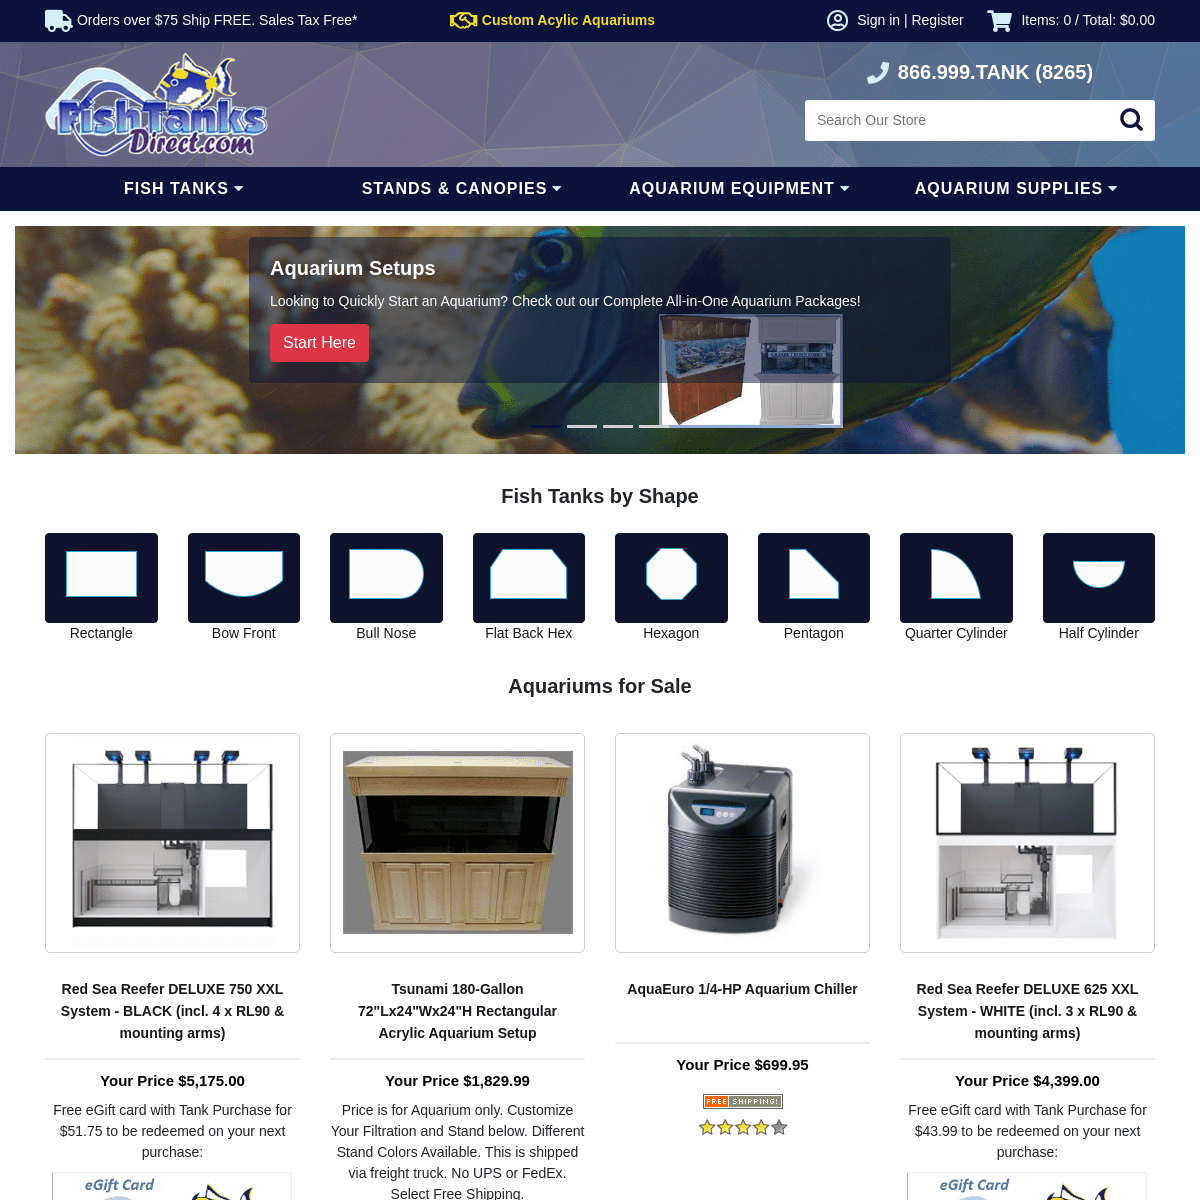 A complete backup of fishtanksdirect.com